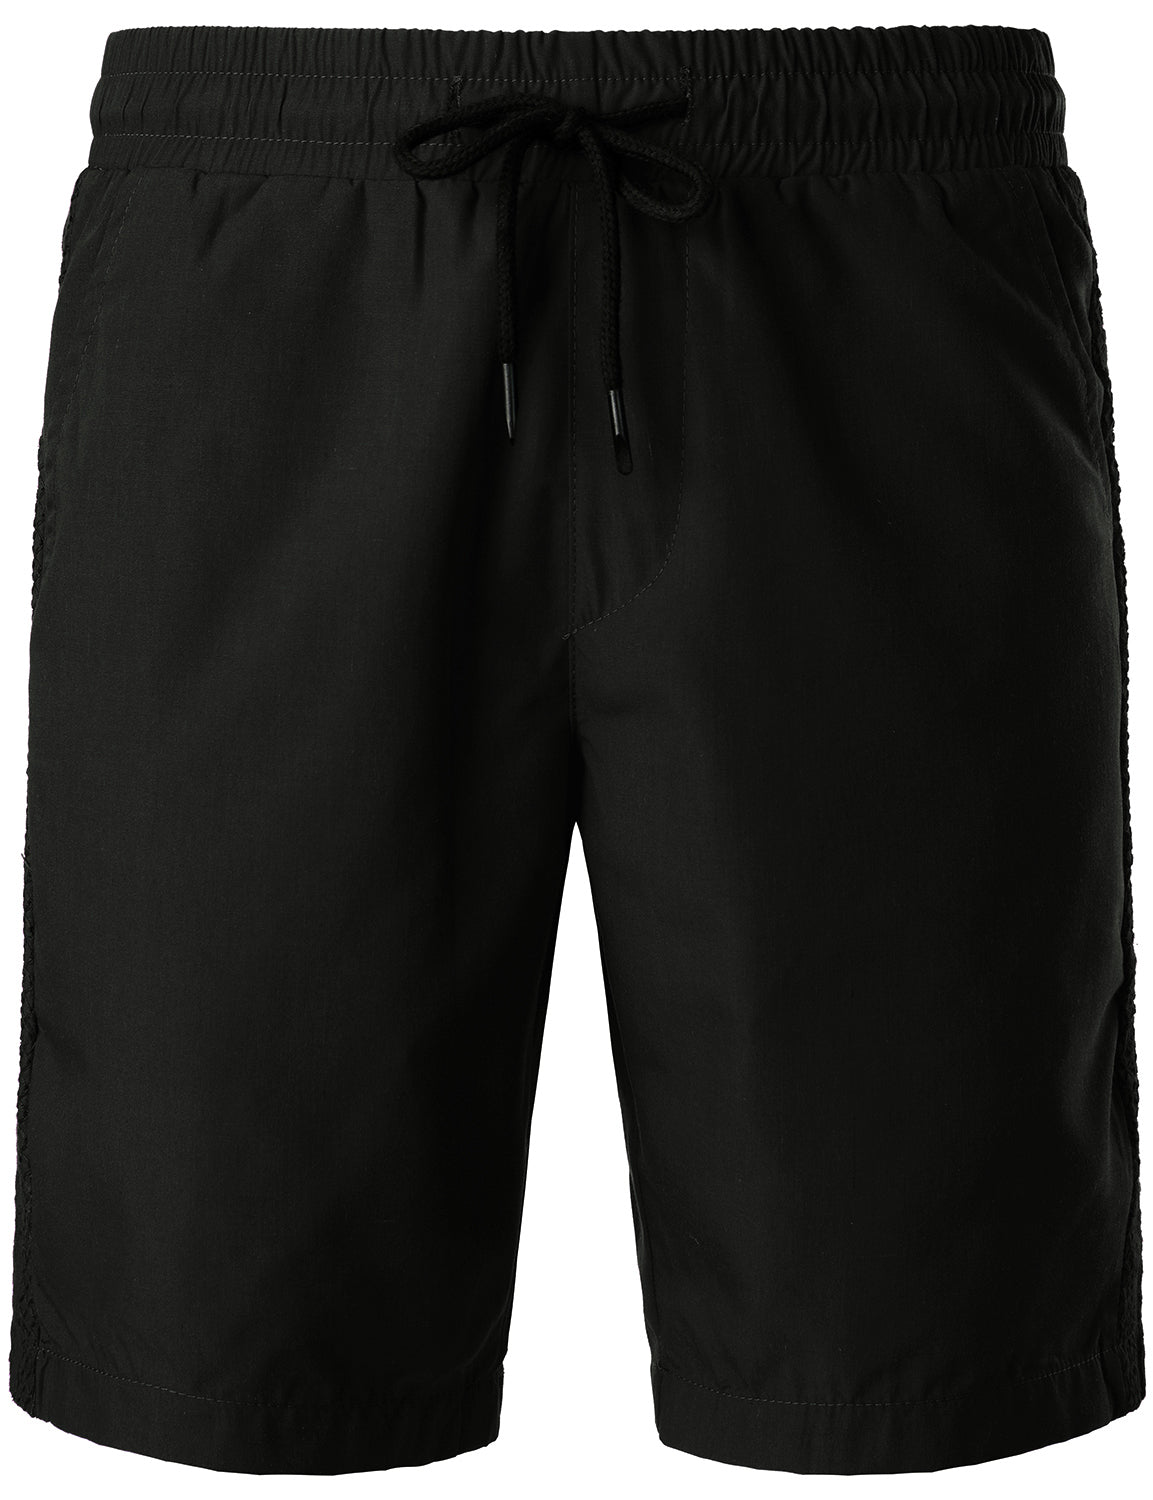 Men's Plus Size Hawaiian Casual Cotton Shorts